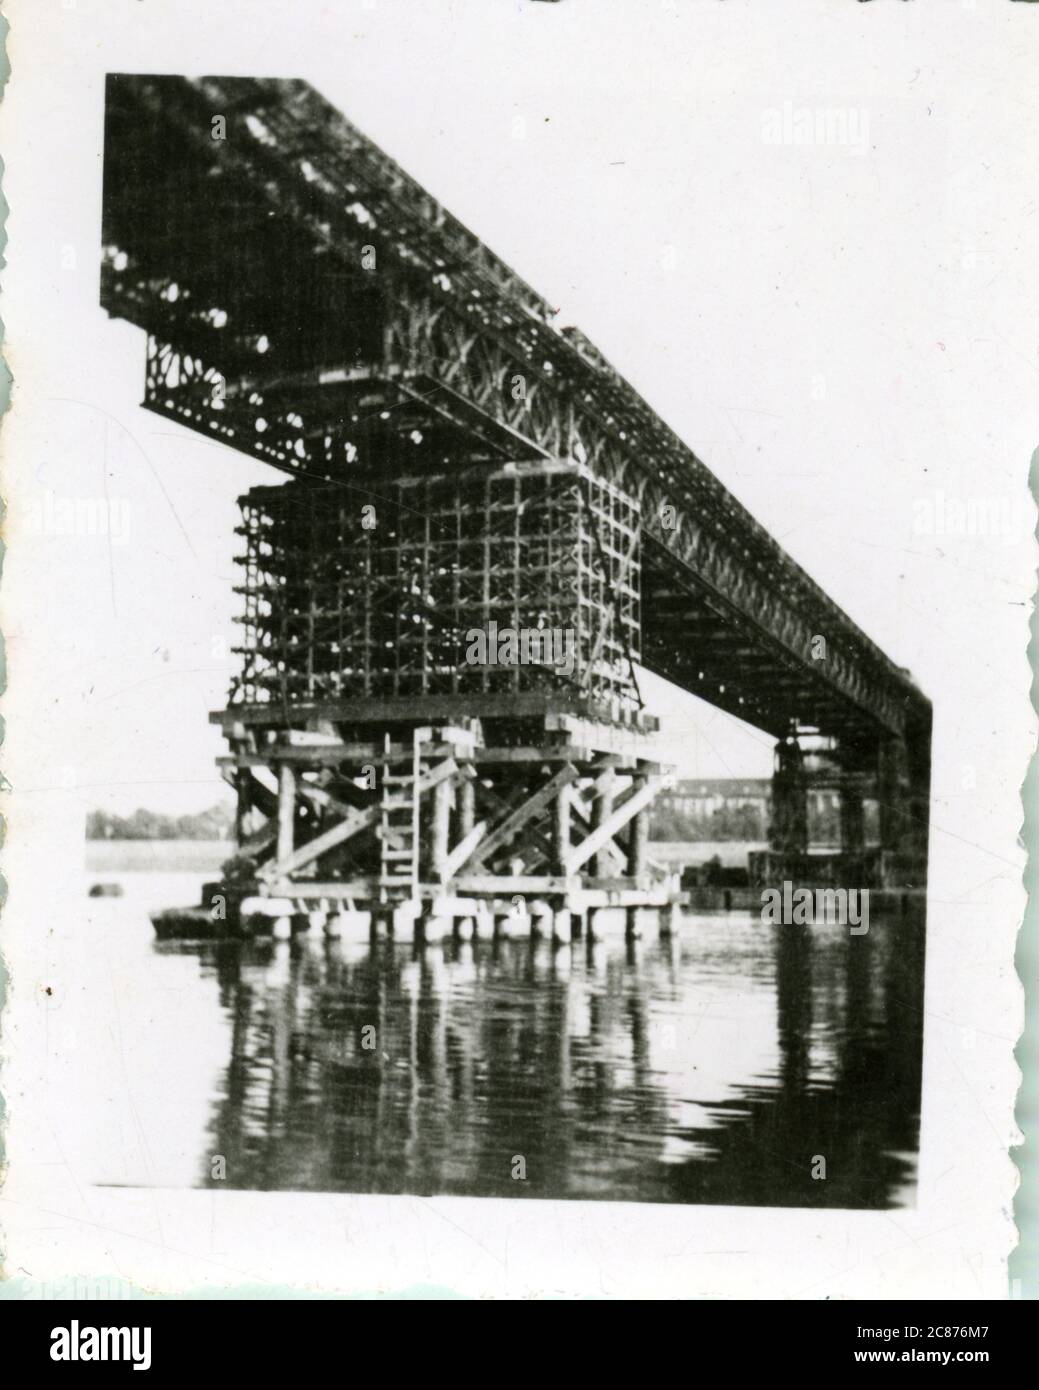 British Army Royal Engineers enaged in the building of The Freeman Bridge, The River Rhine, Dusseldorf, North Rhine-Westphalia, Germany. 1945 Stock Photo